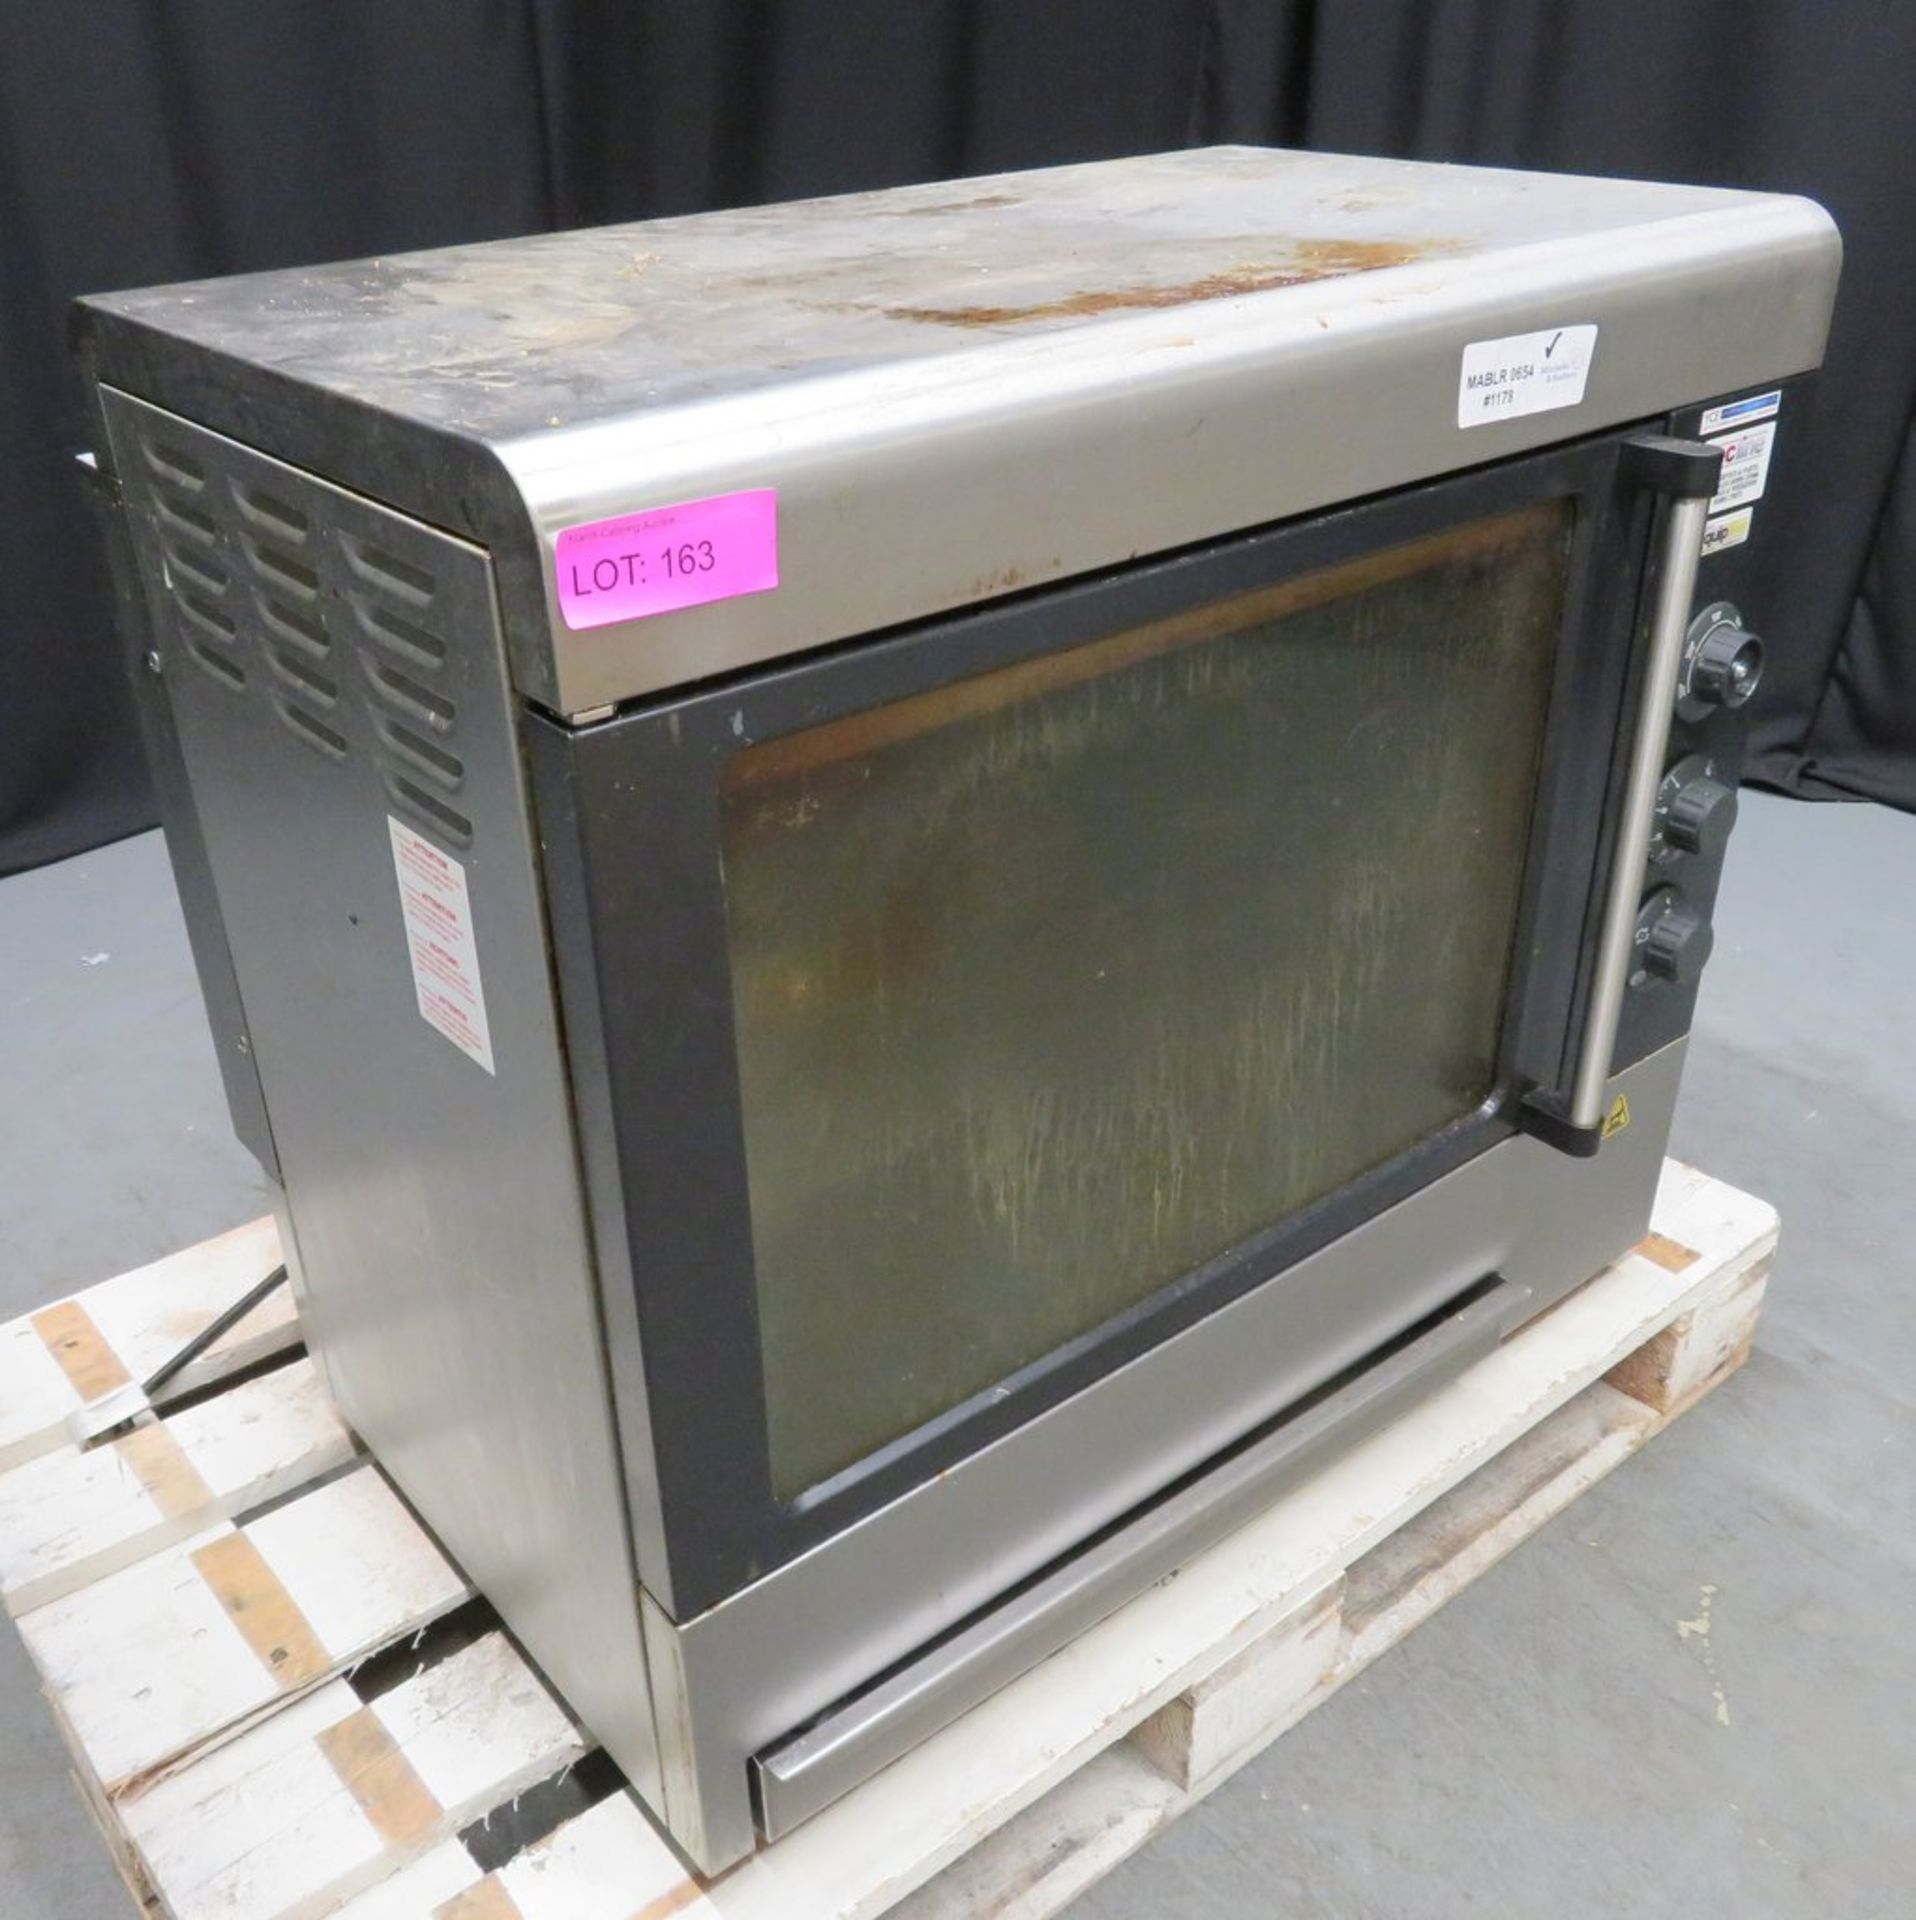 Fri-jado rotisserie oven, 1 phase electric - Image 2 of 8